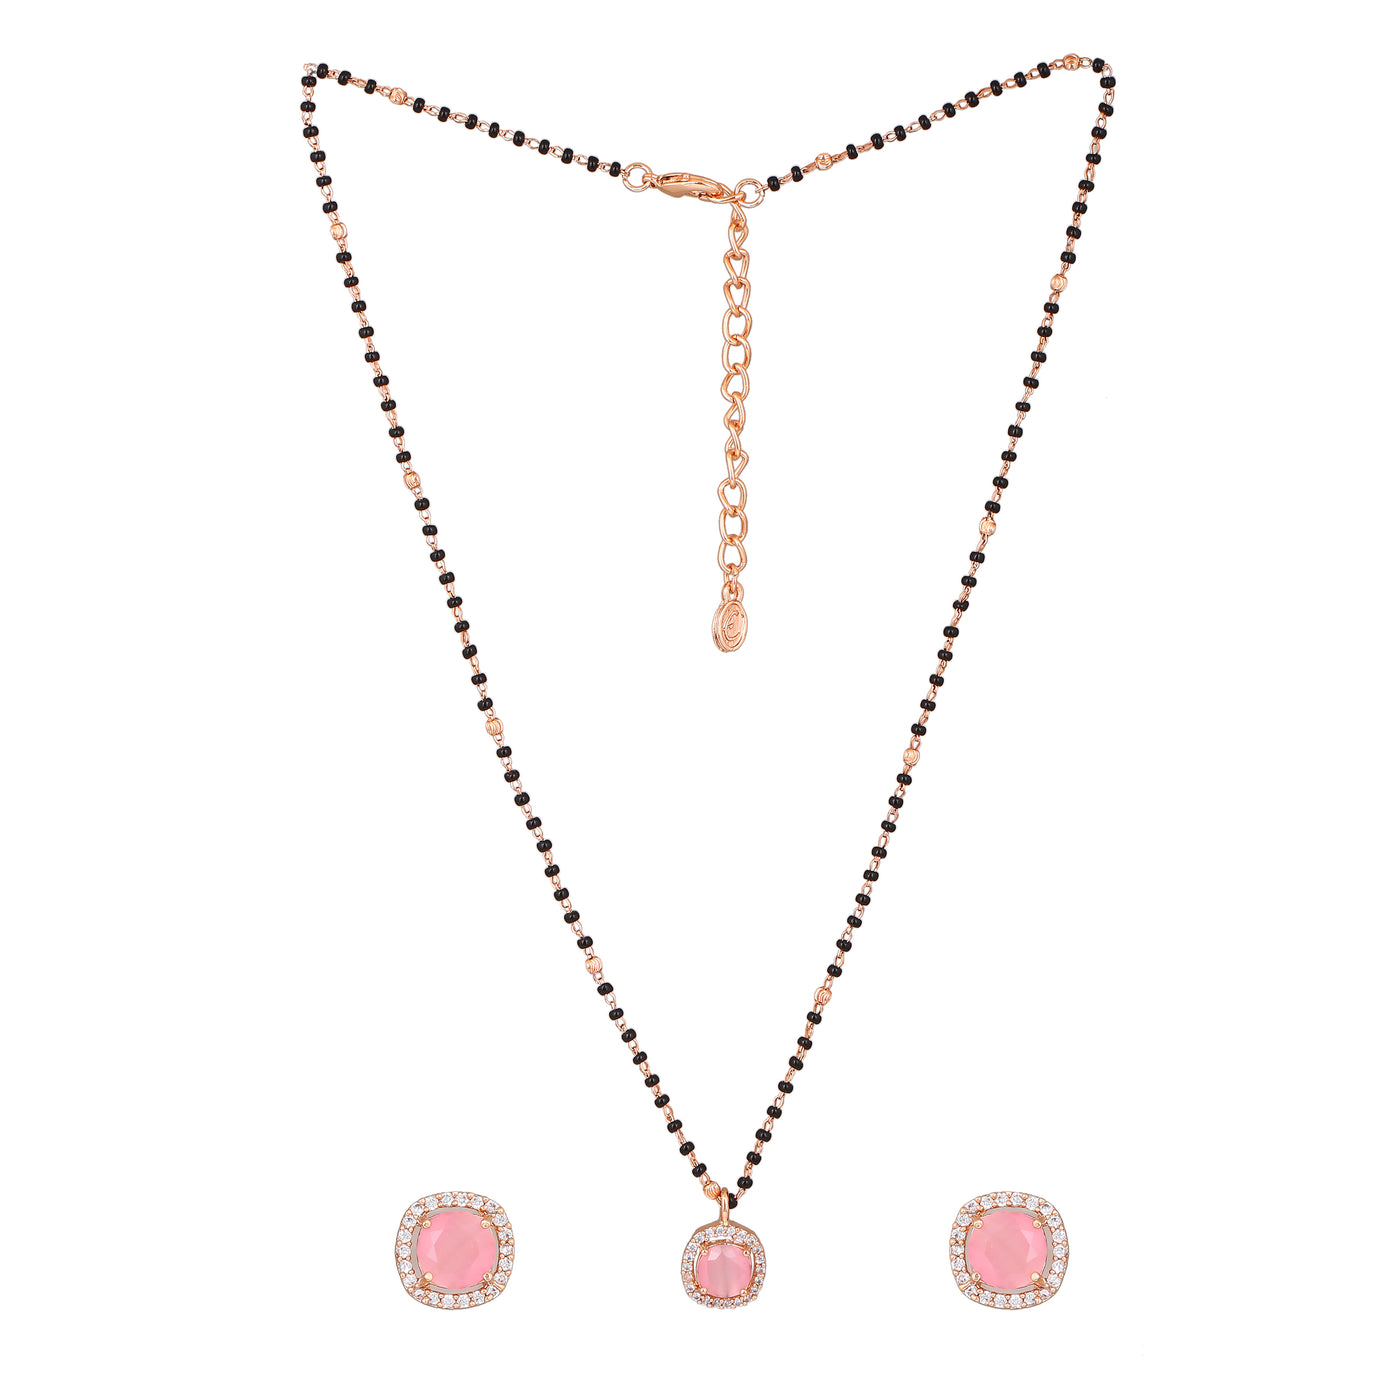 Estele Rose Gold Plated CZ Dazzling Square Designer Mangalsutra Necklace Set with Mint Pink Stones for Women